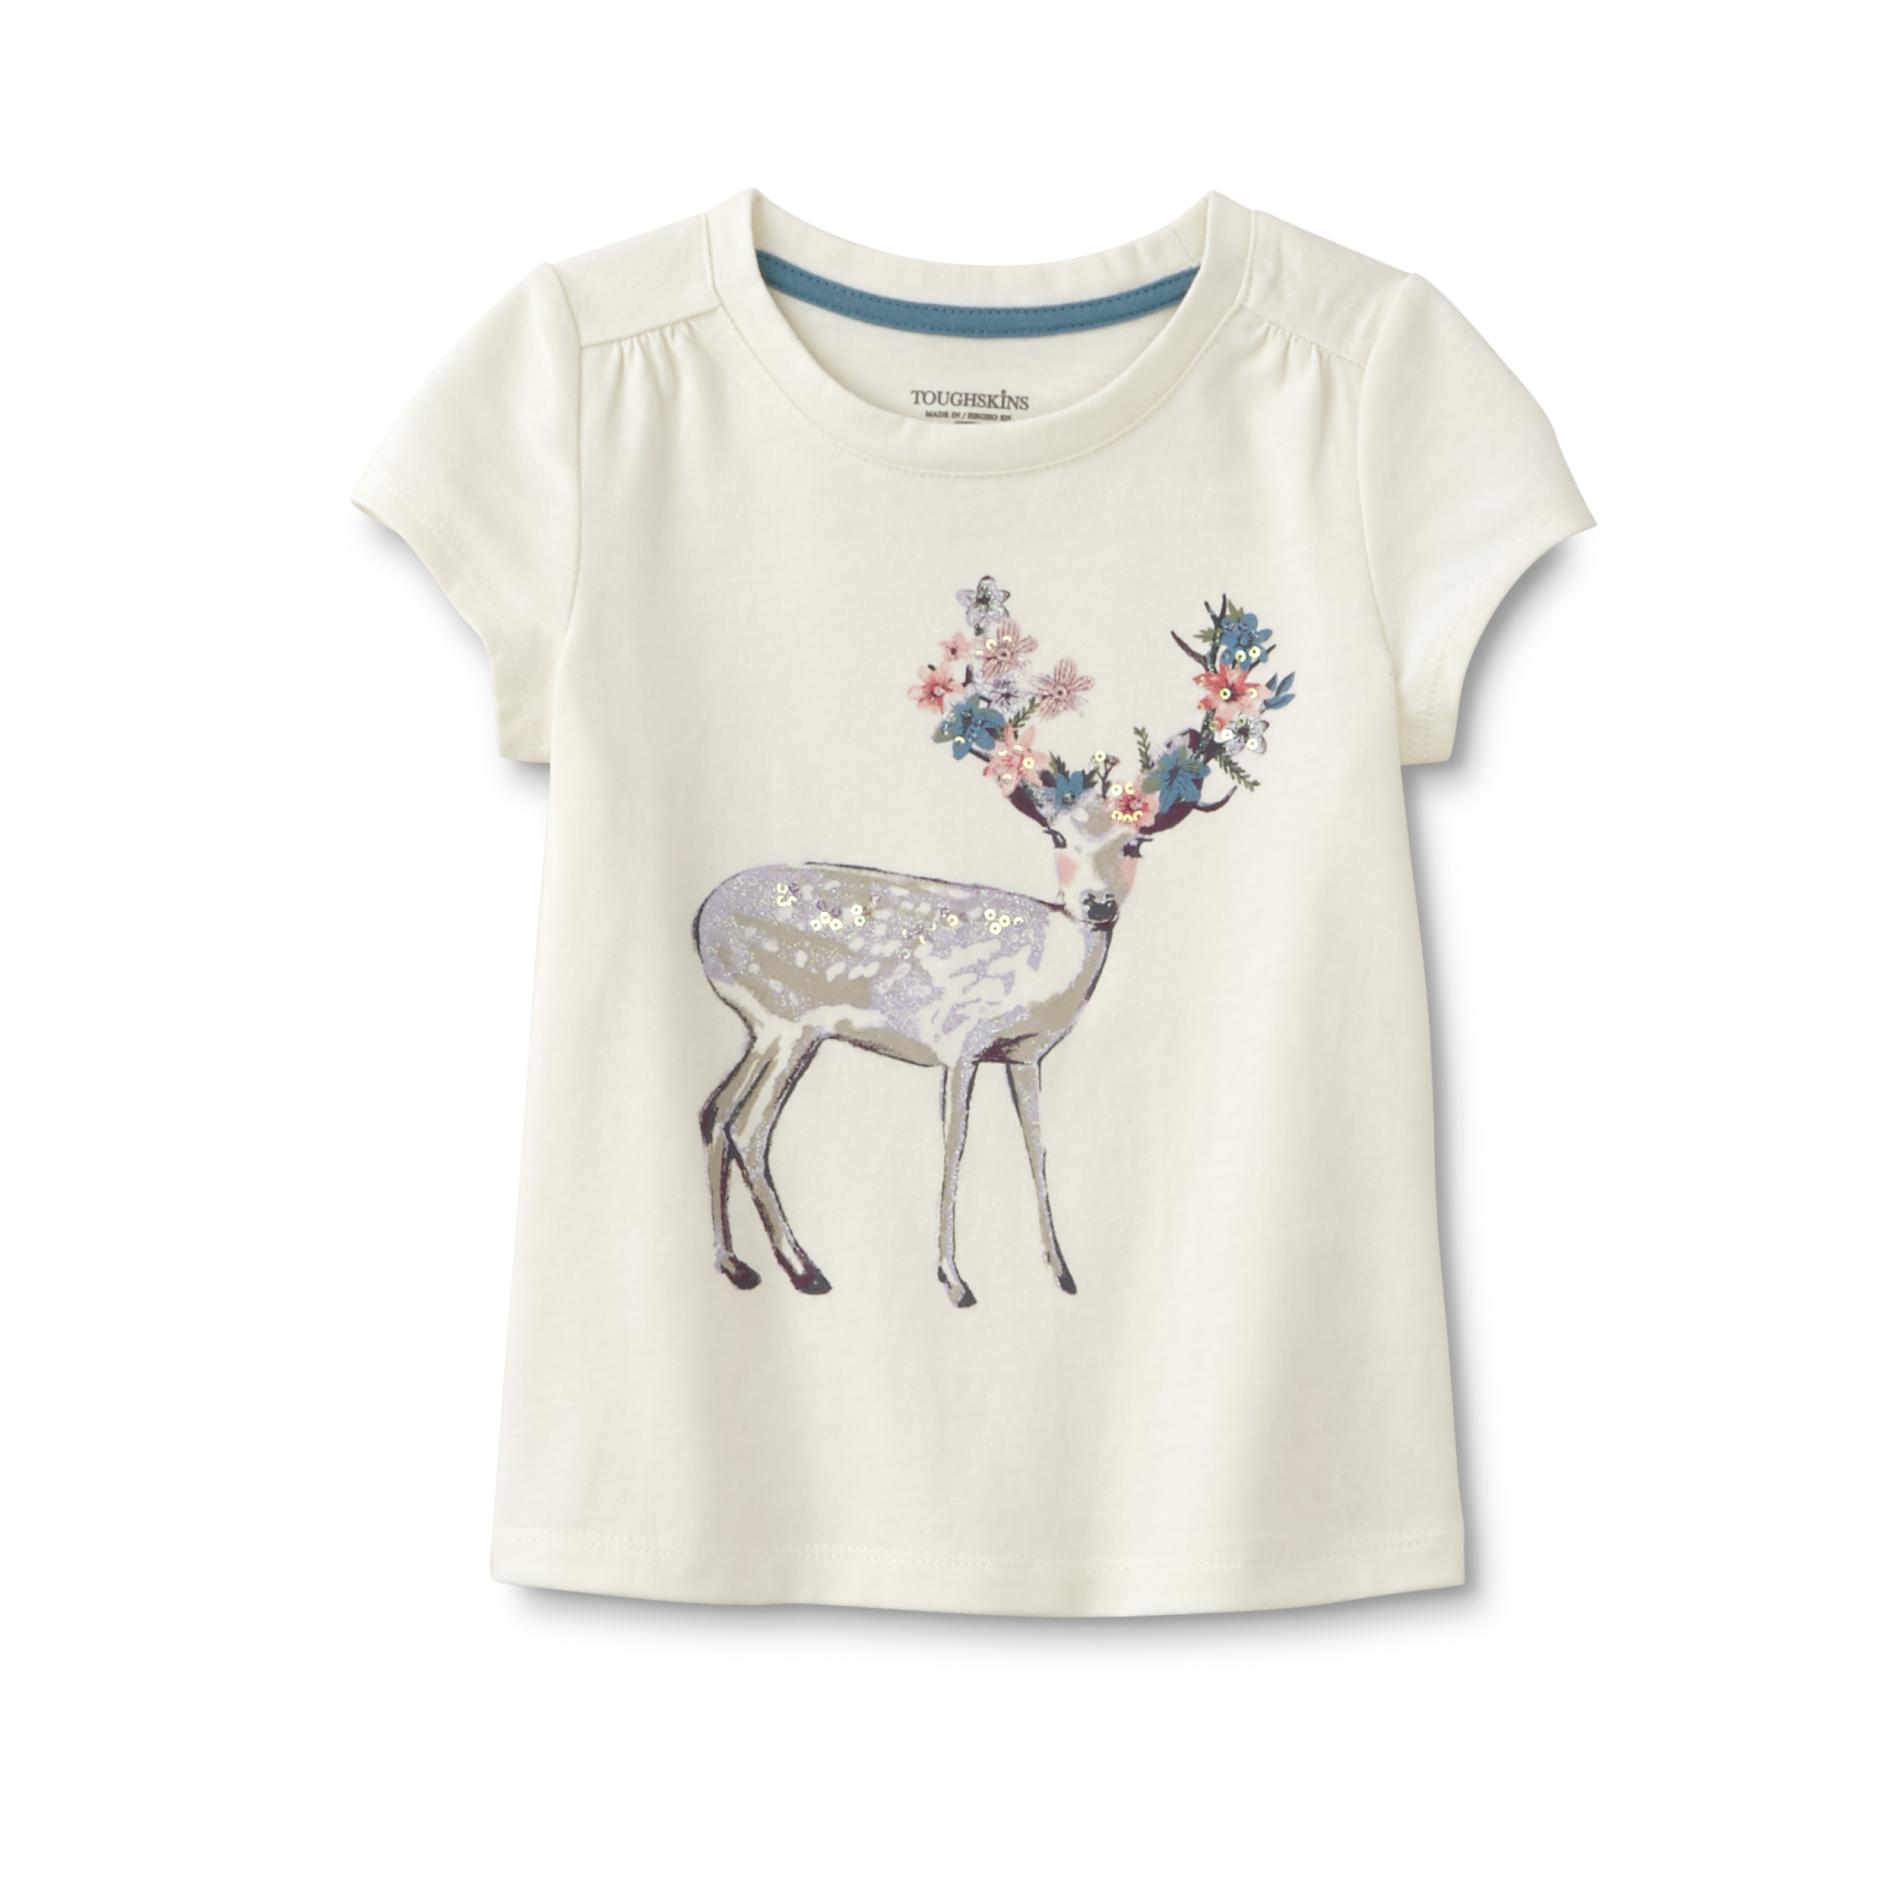 Toughskins Infant & Toddler Girl's Graphic T-Shirt - Deer